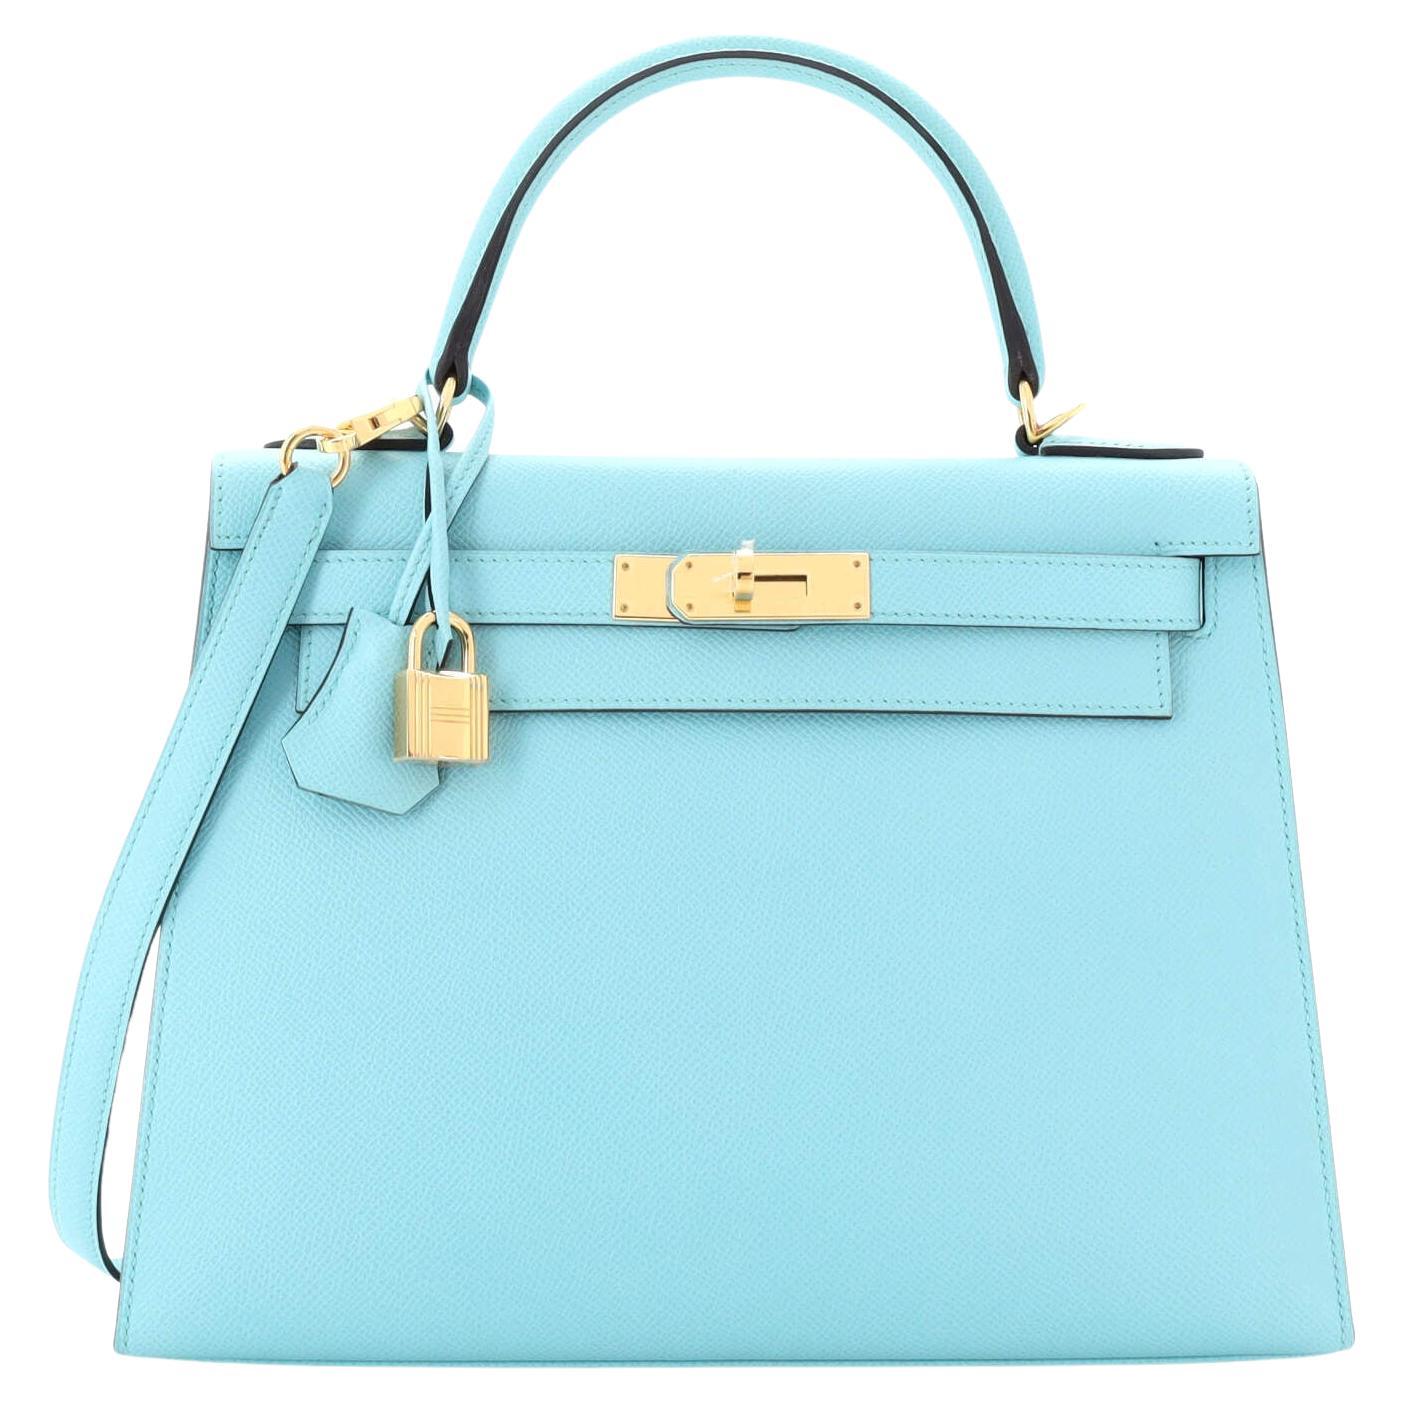 Hermes Kelly Handbag Bleu Atoll Epsom with Gold Hardware 28